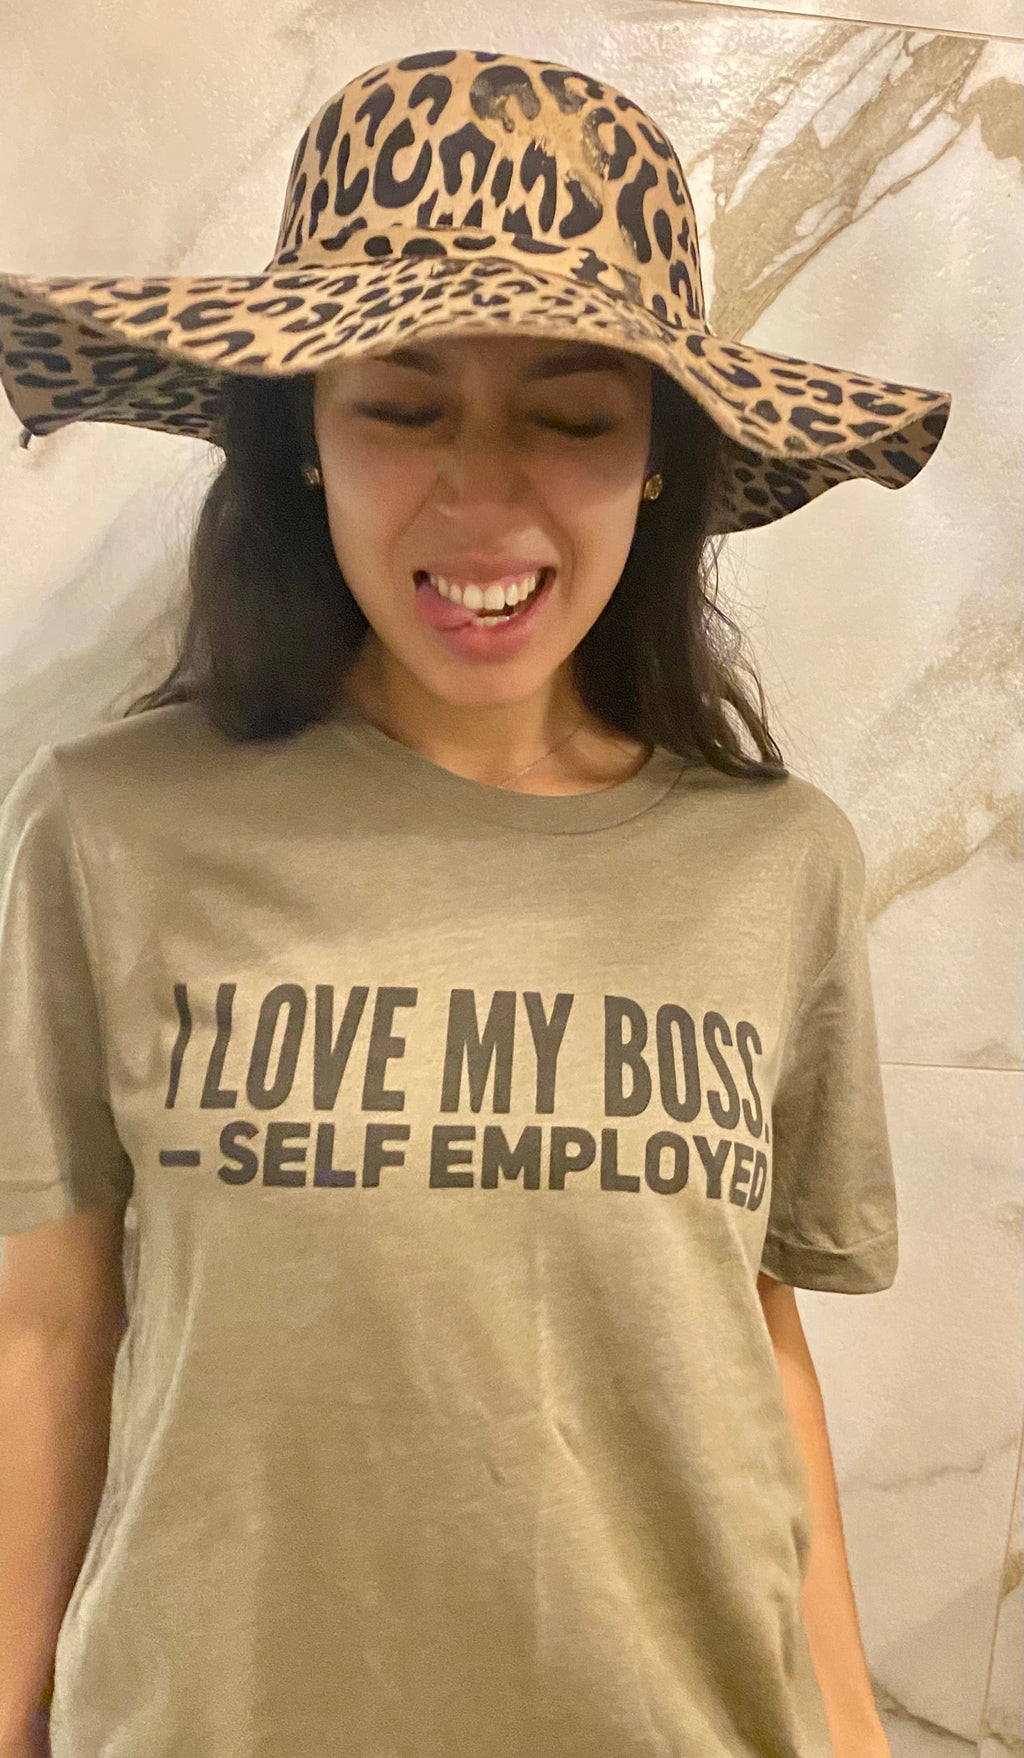 I LOVE MY BOSS - Self Employed T shirt